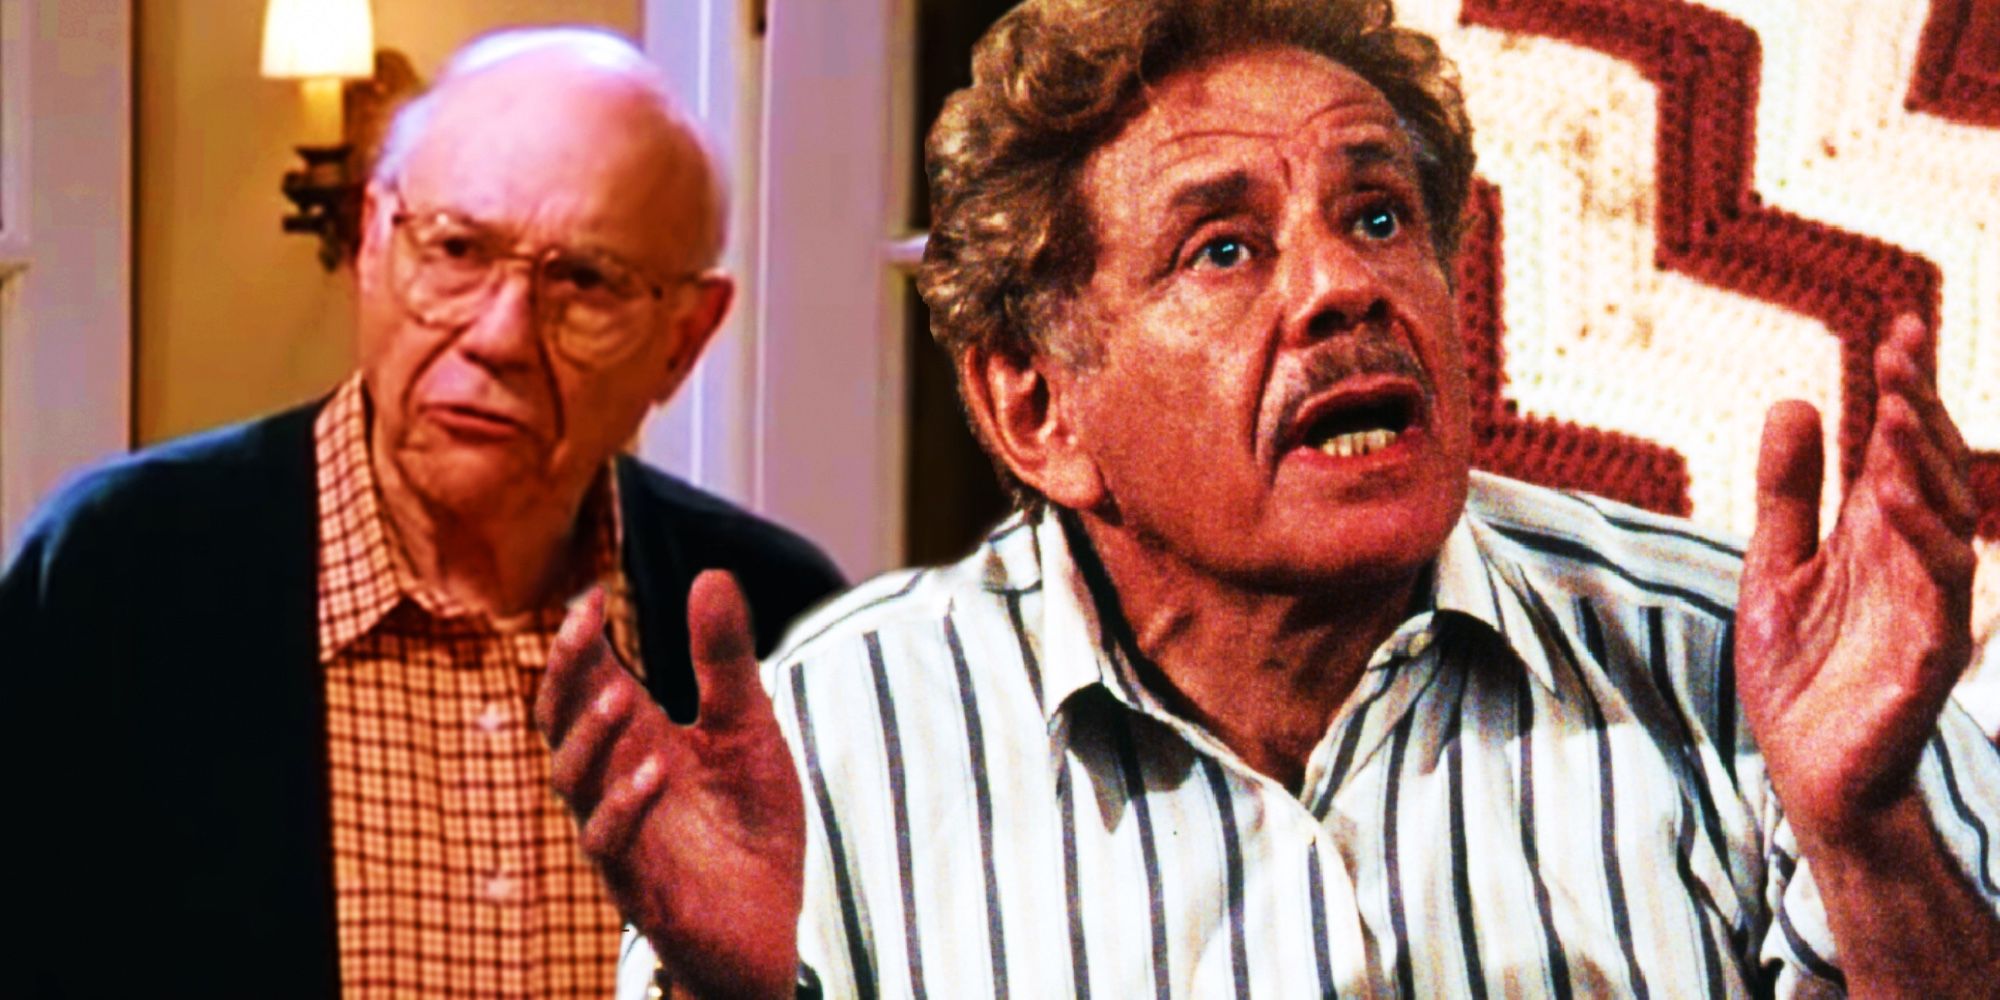 Why Seinfeld Recast Frank Costanza From John Randolph To Jerry Stiller